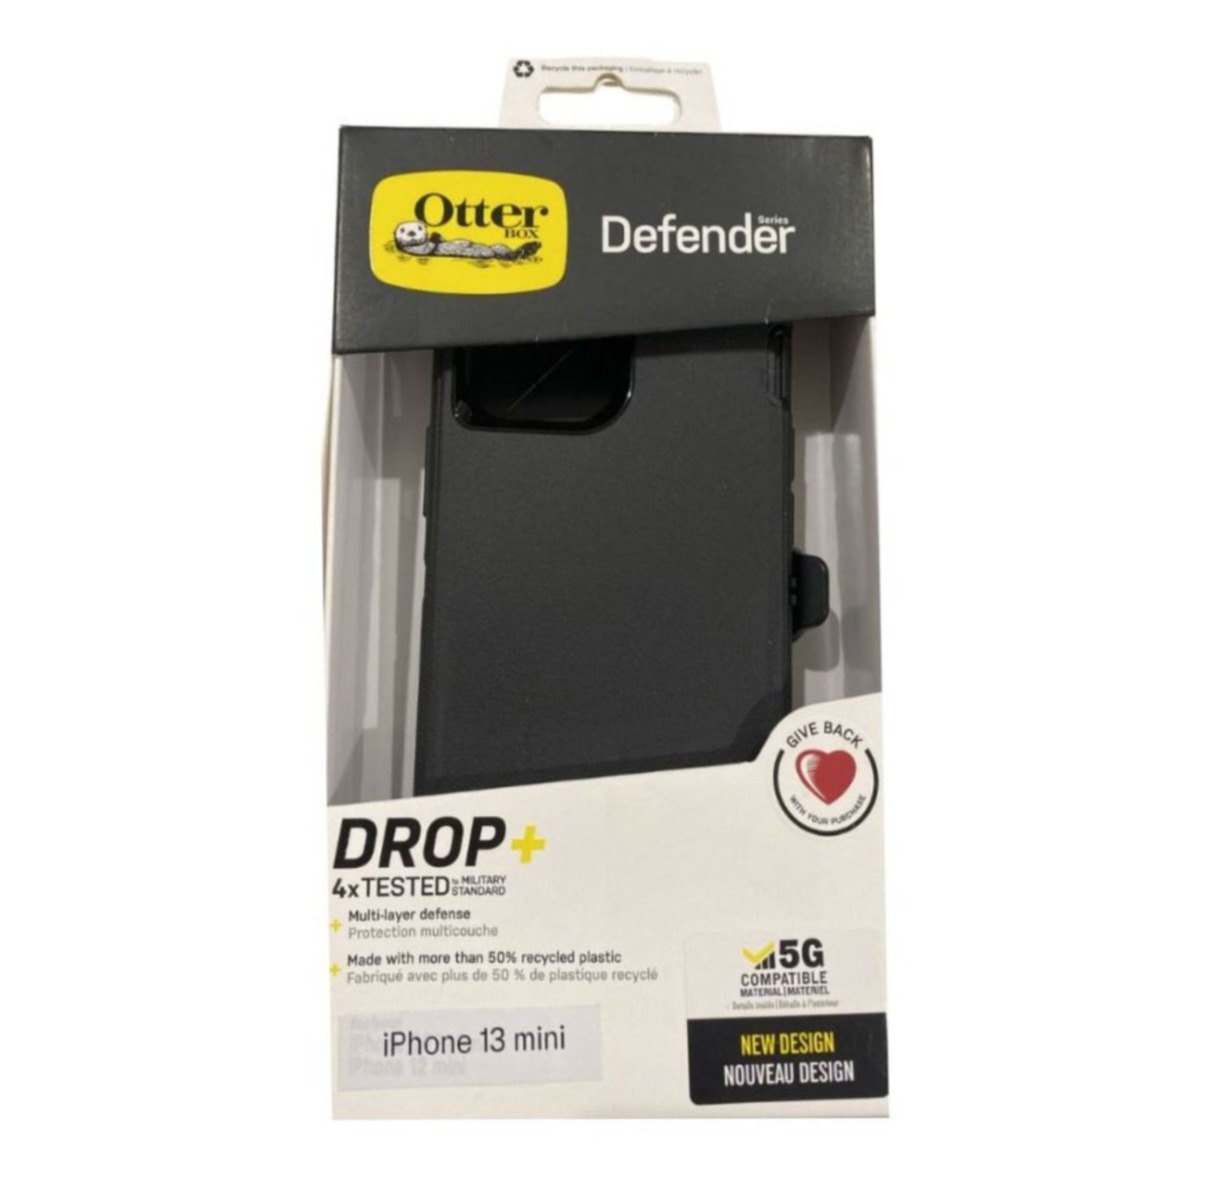 Otterbox Defender Case for iPhone 13 mini - Black